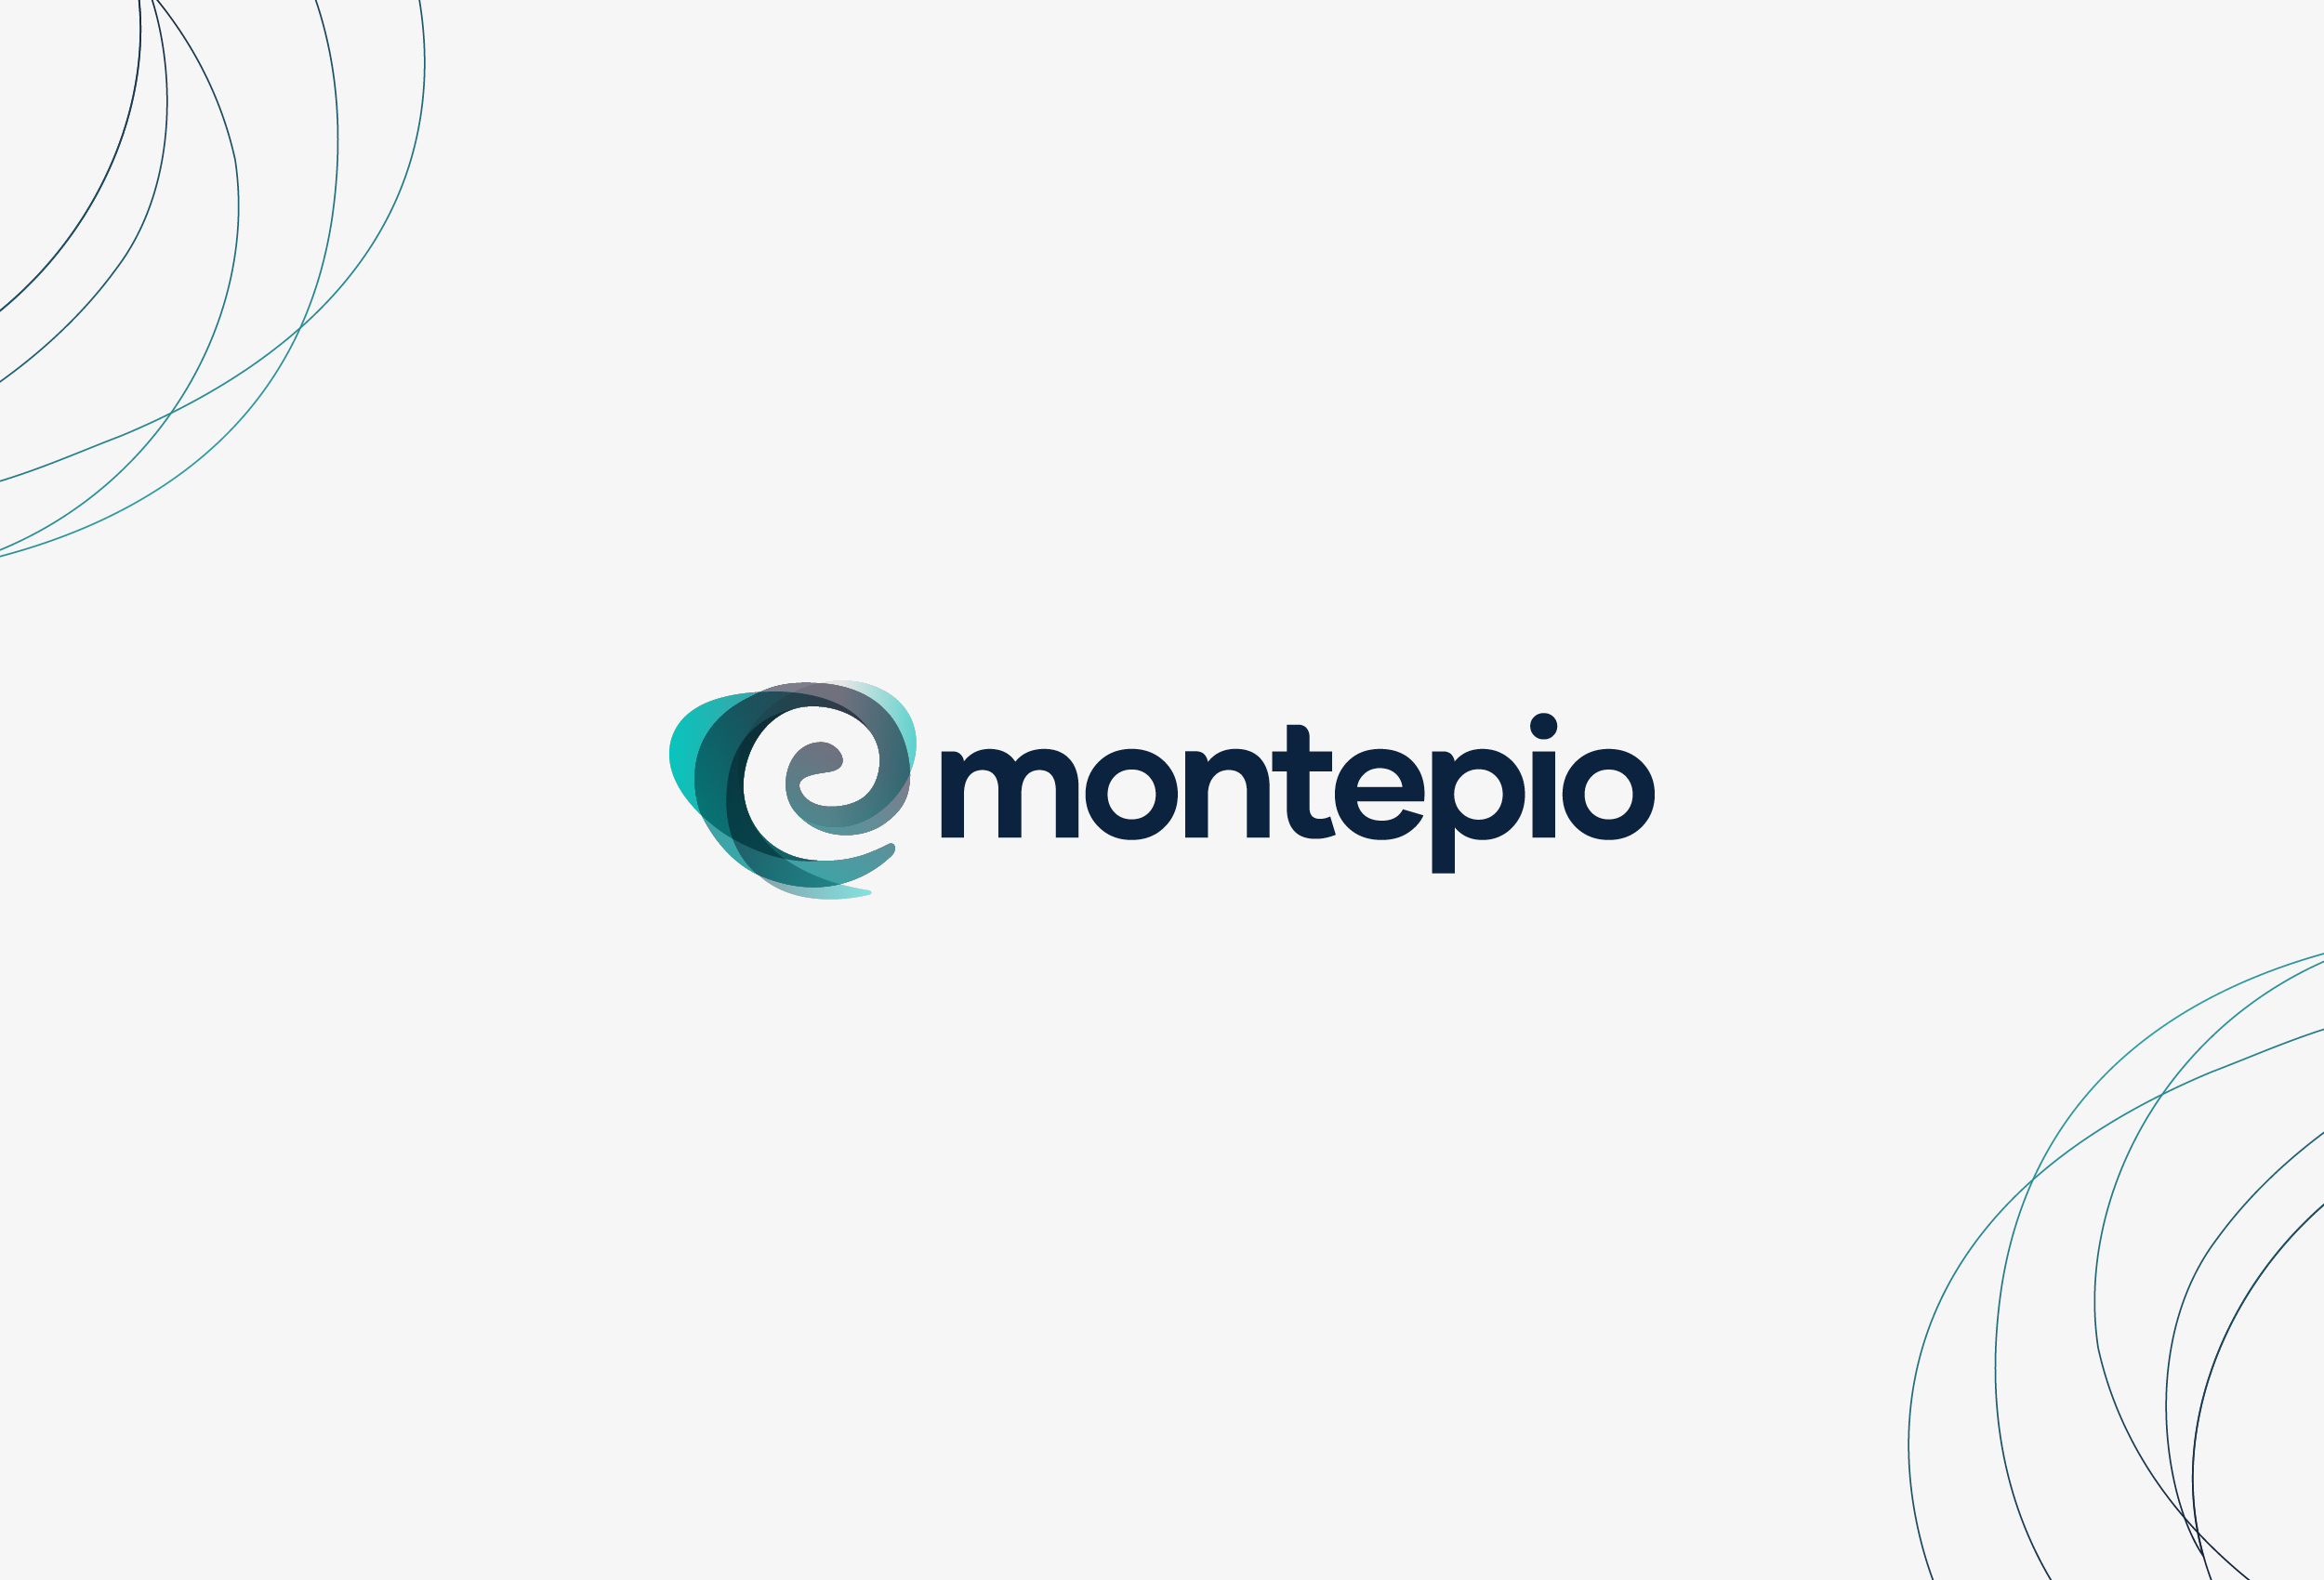 e-montepio by Duplex Studio by Duplex Studio - Creative Work